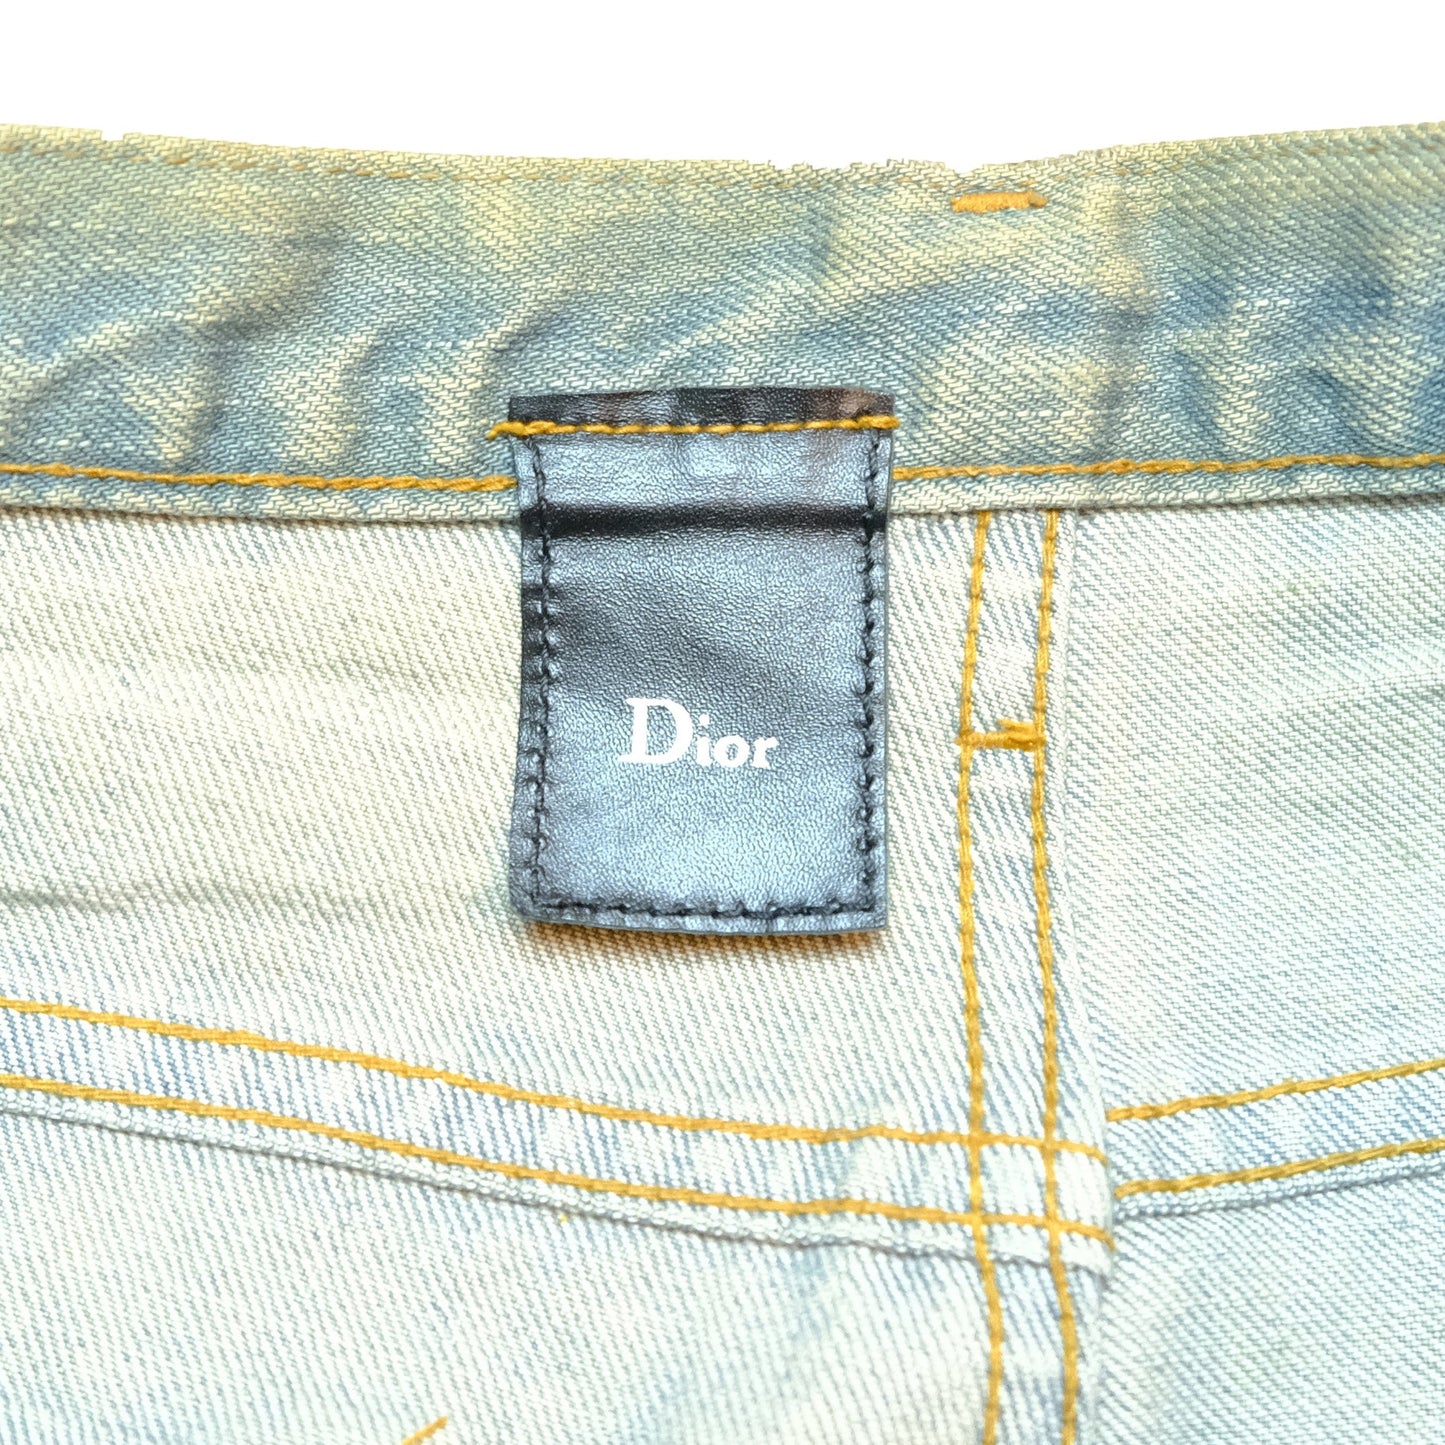 Dior - SS04 "Strip" Ice Blue Waxed Denim, Size 31